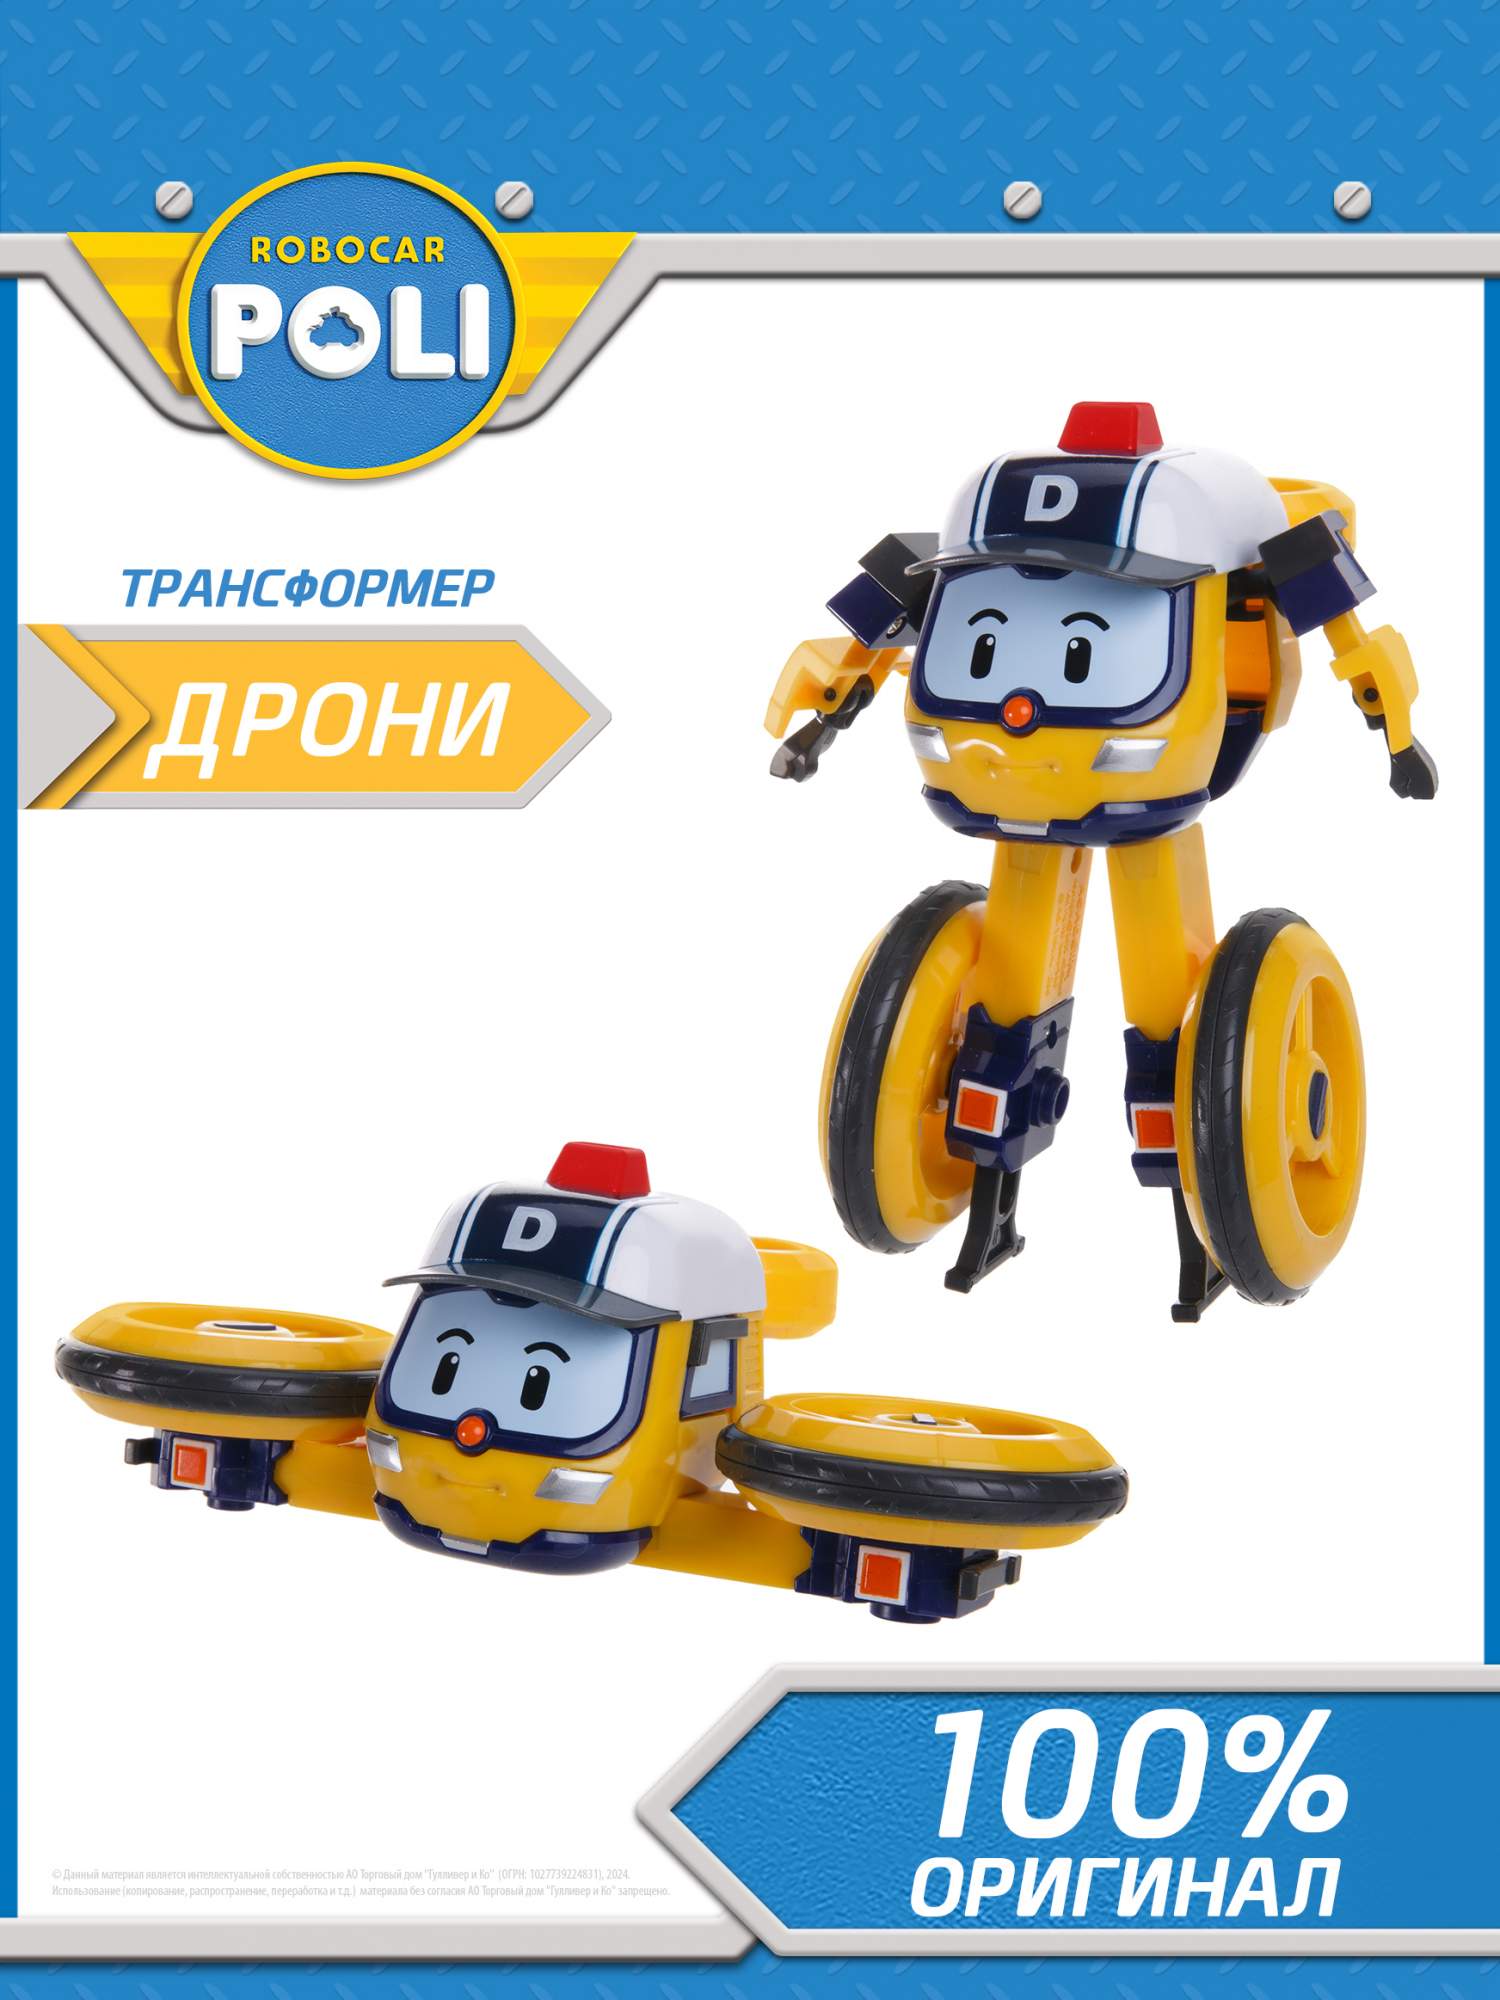 Робот-трансформер Robocar Poli, Дрони 10 см set of 6 pcs poli car kids robot toy transform vehicle cartoon anime action figure toys for children gift juguetes